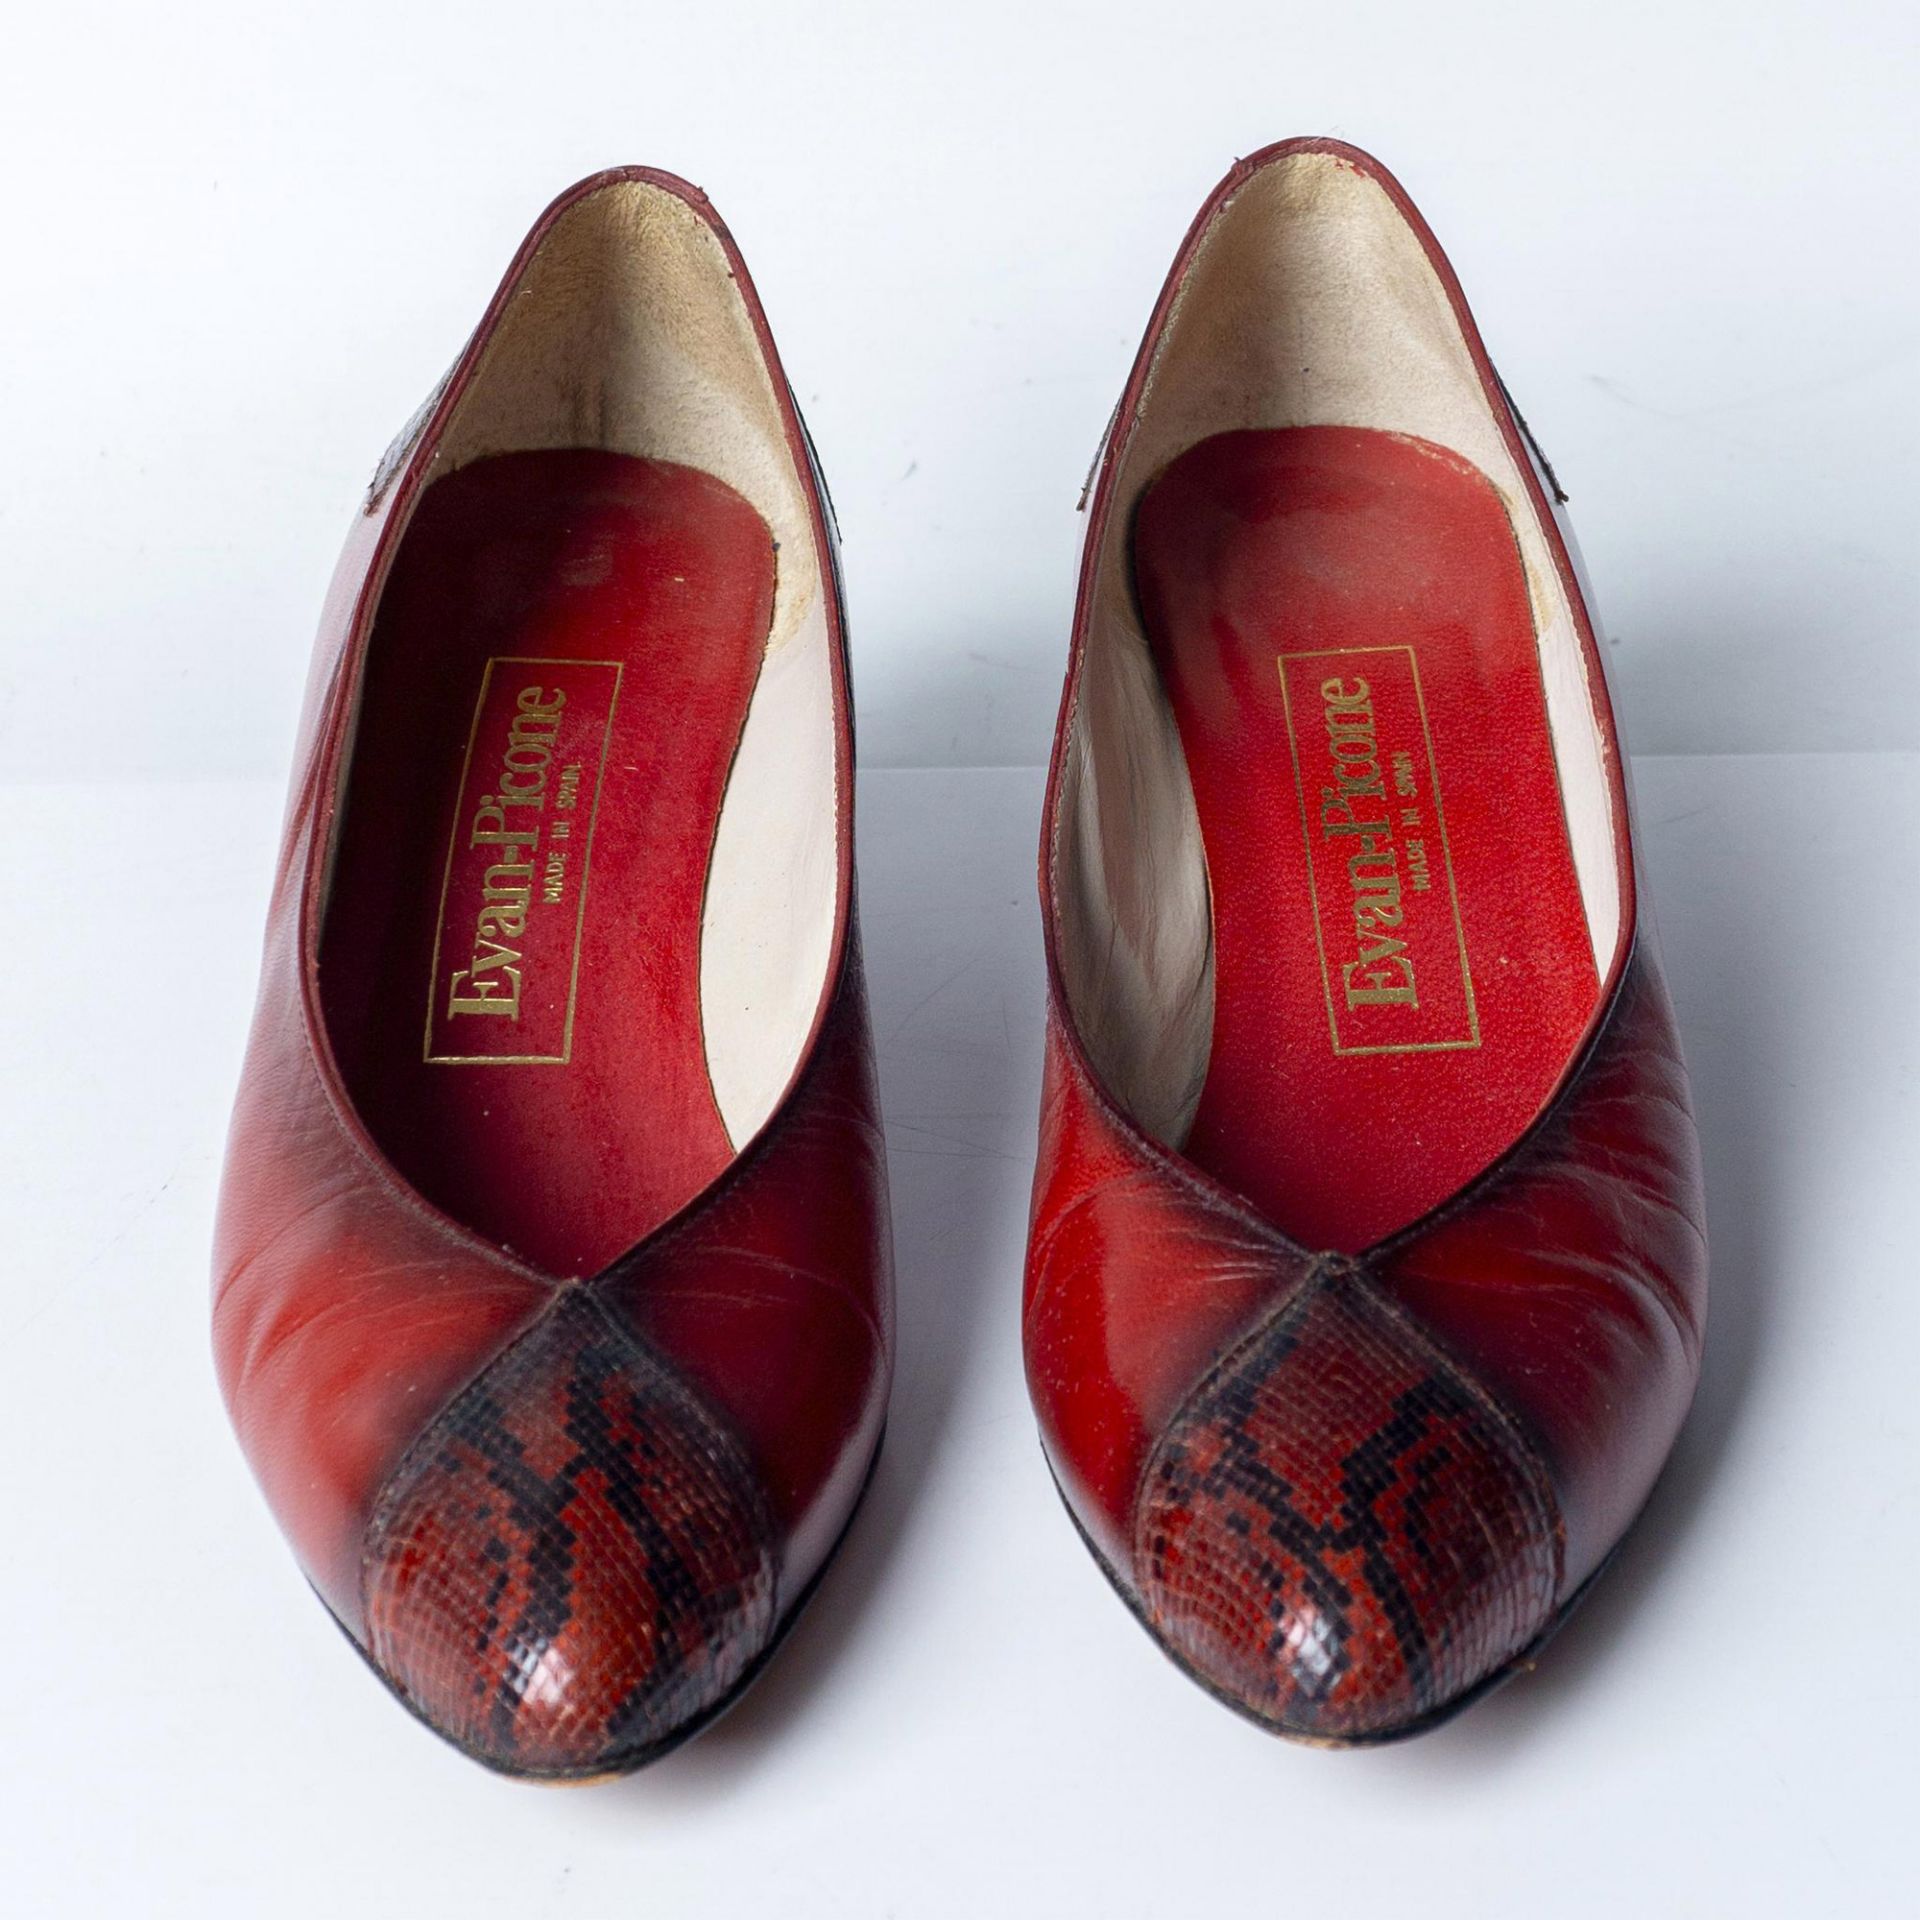 Handmade Evan-Picone Spain Red Leather Ladies Dress Shoes